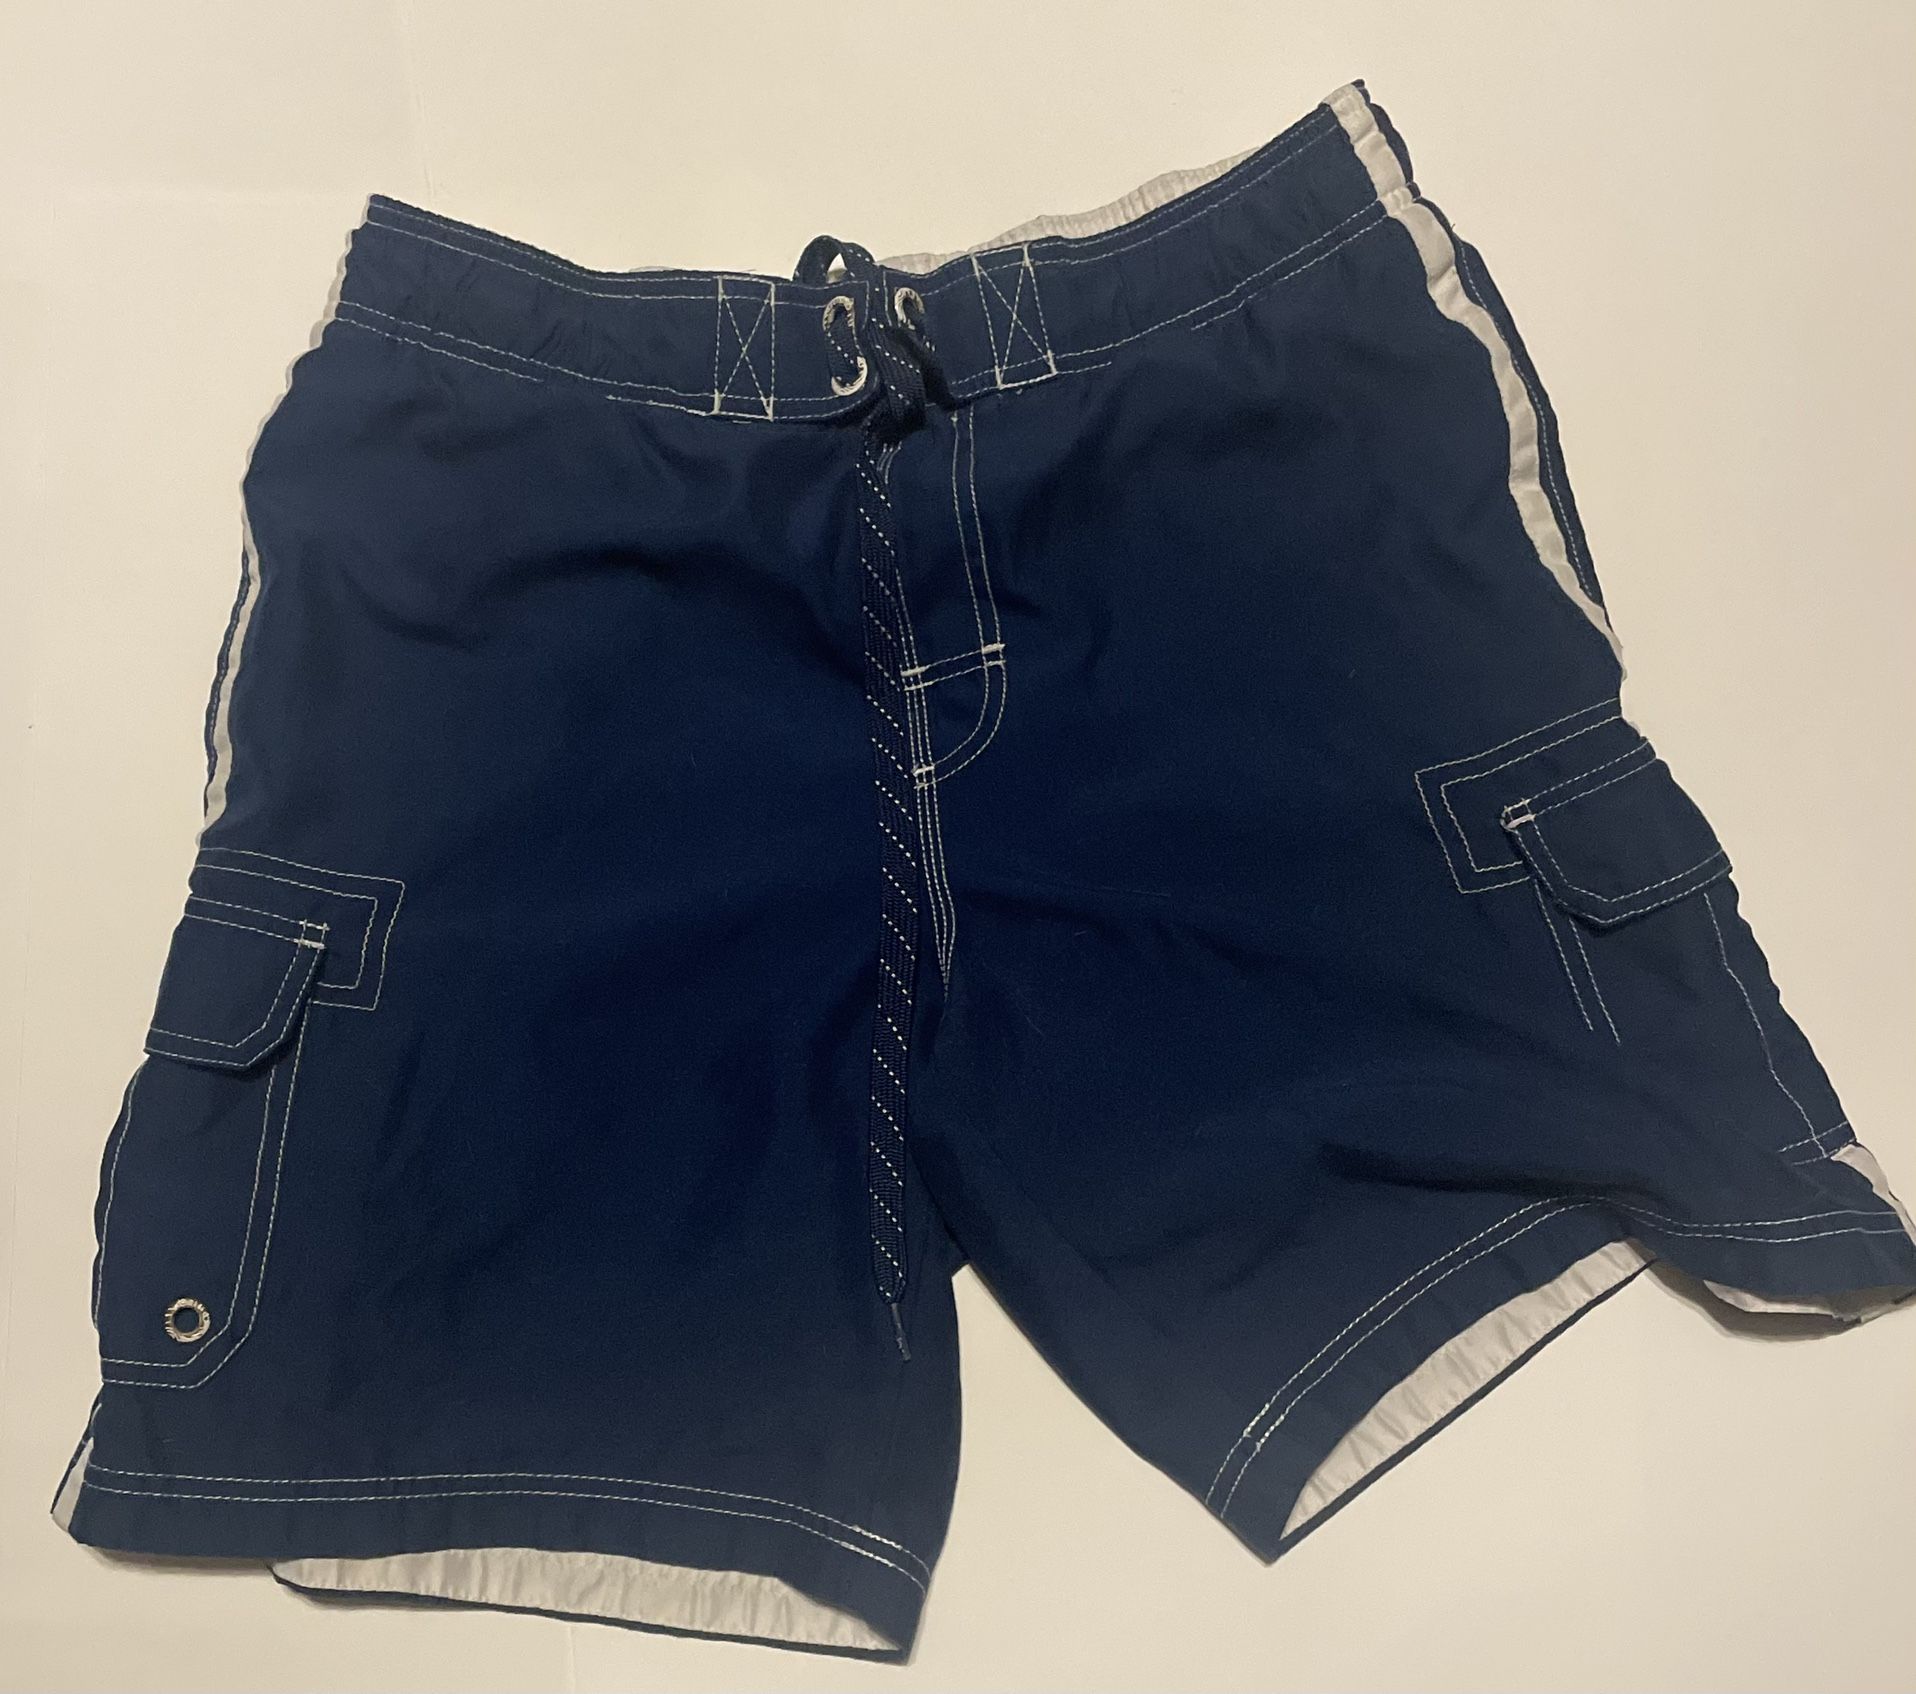 Blue OP Men’s Swim Trunks Shorts Size Medium 